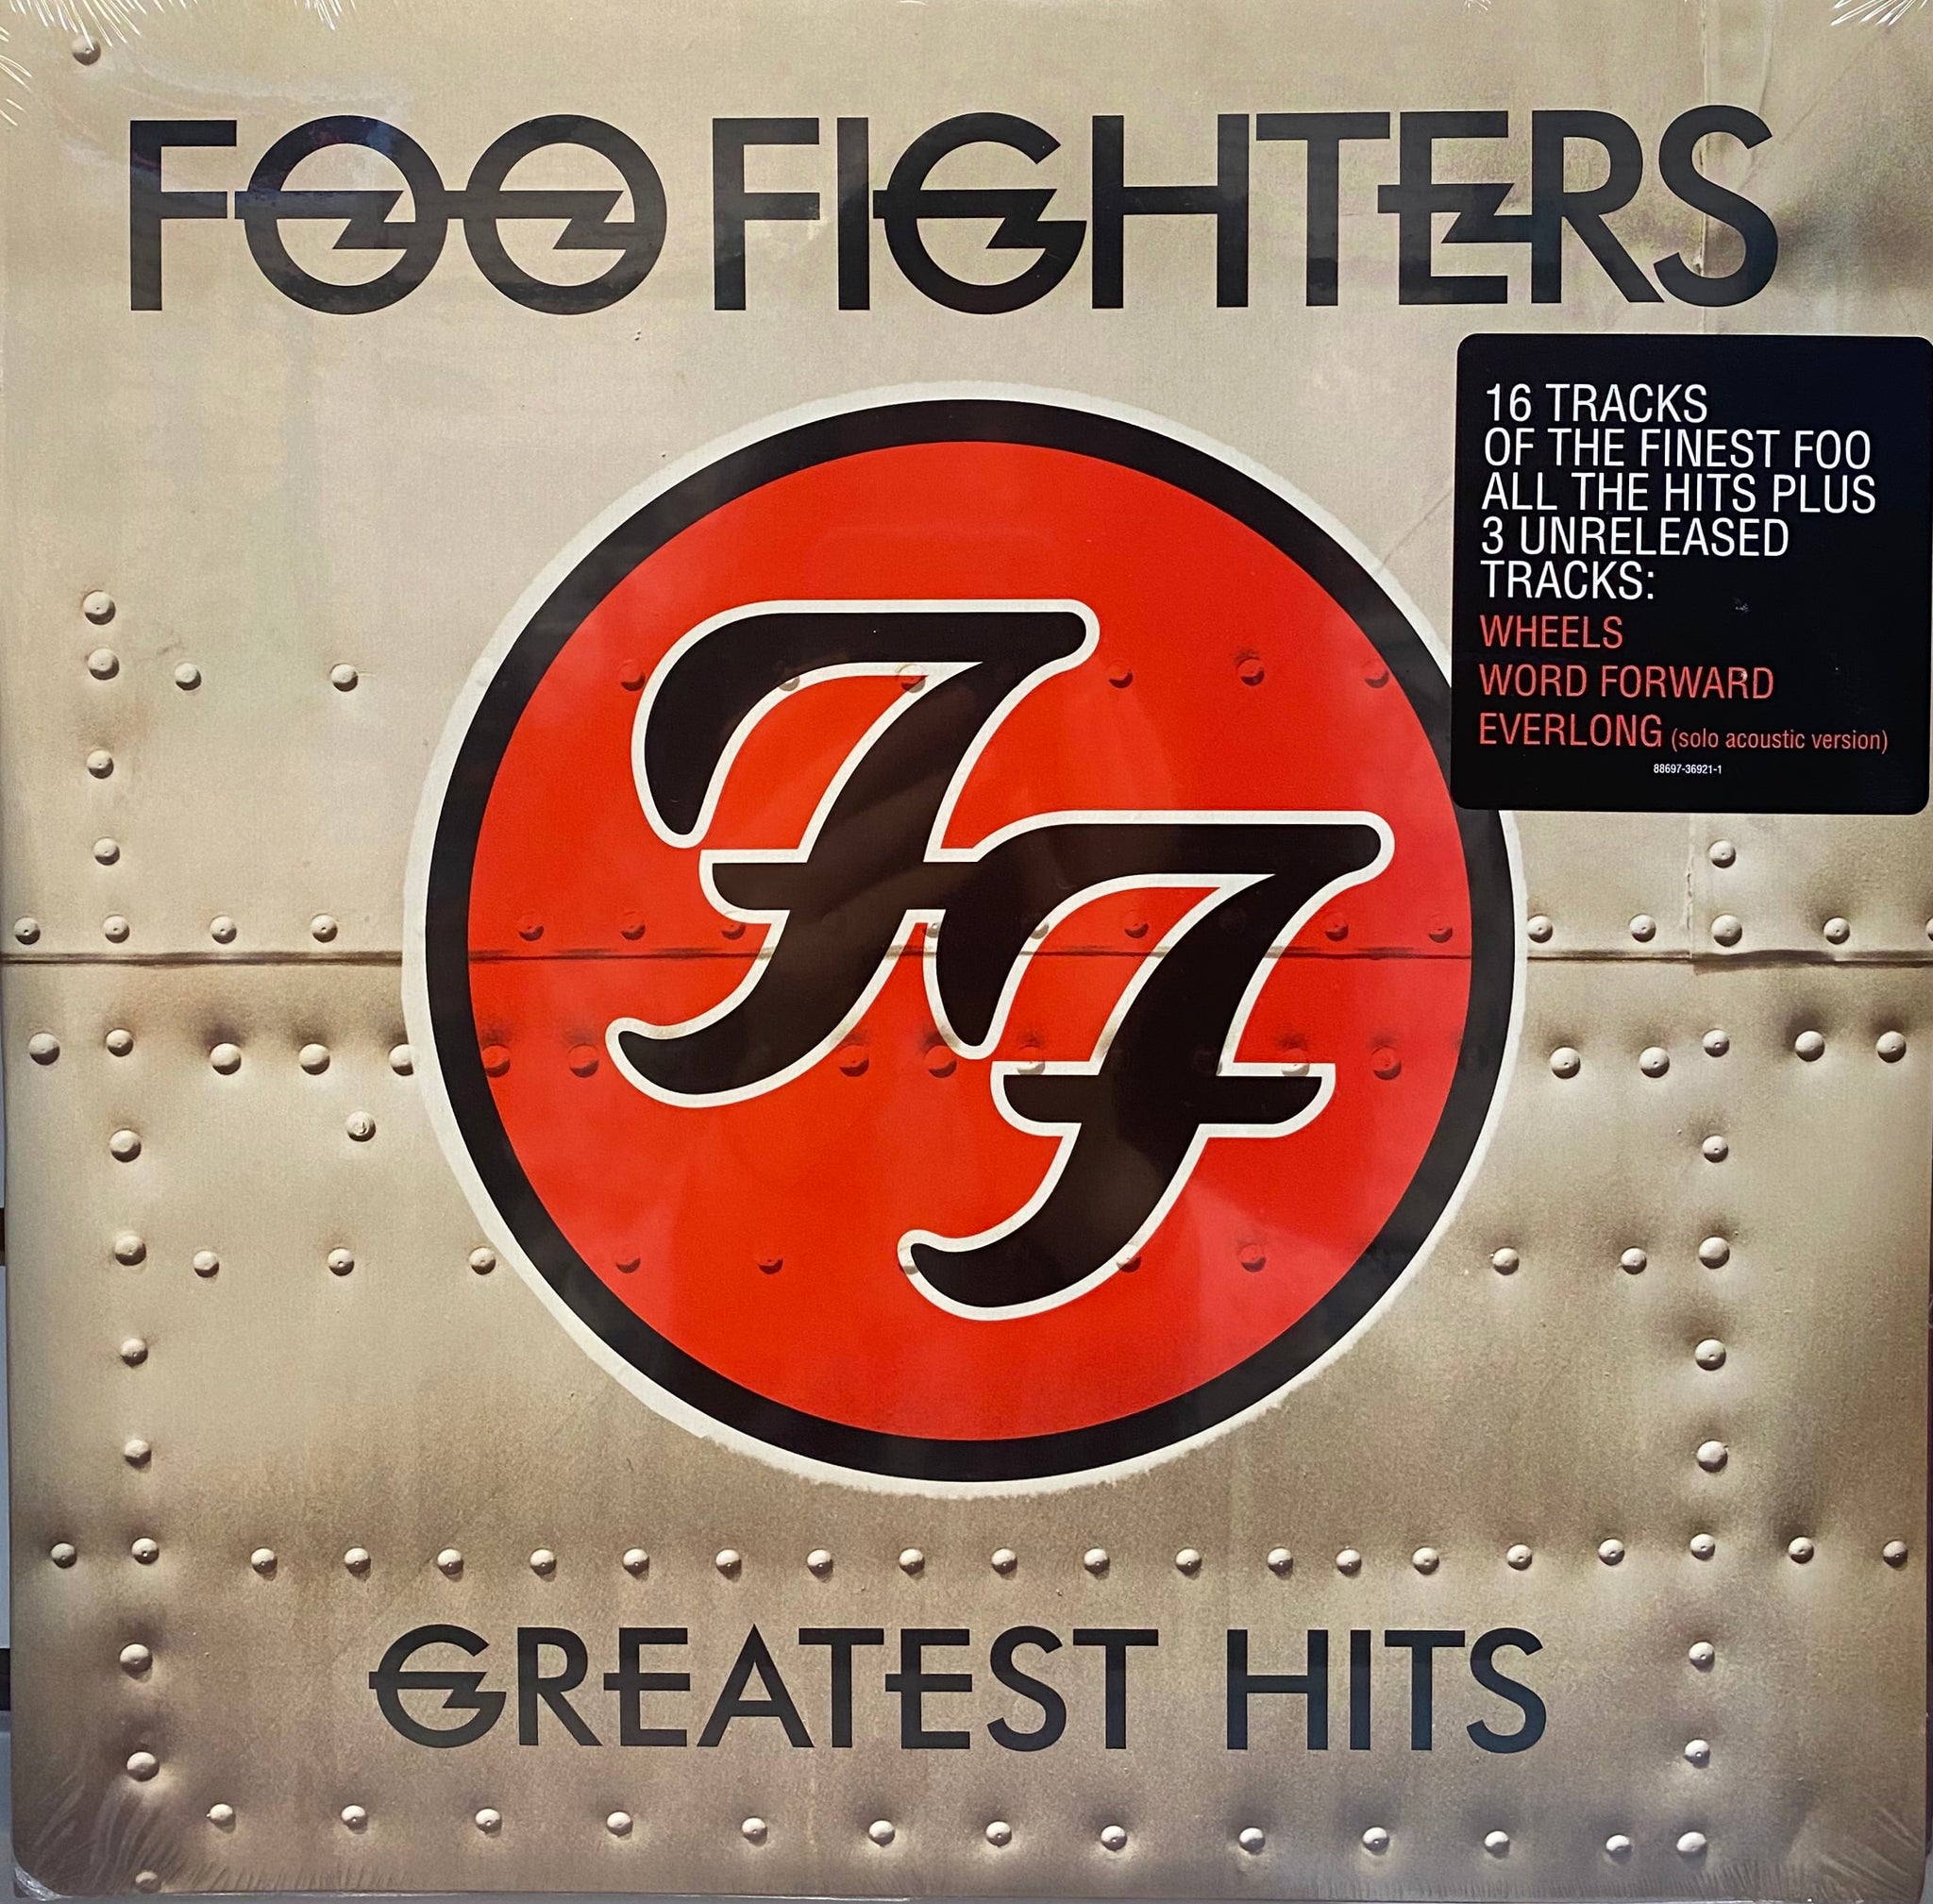 Foo Fighters - Greatest Hits - Vinyl Record LP